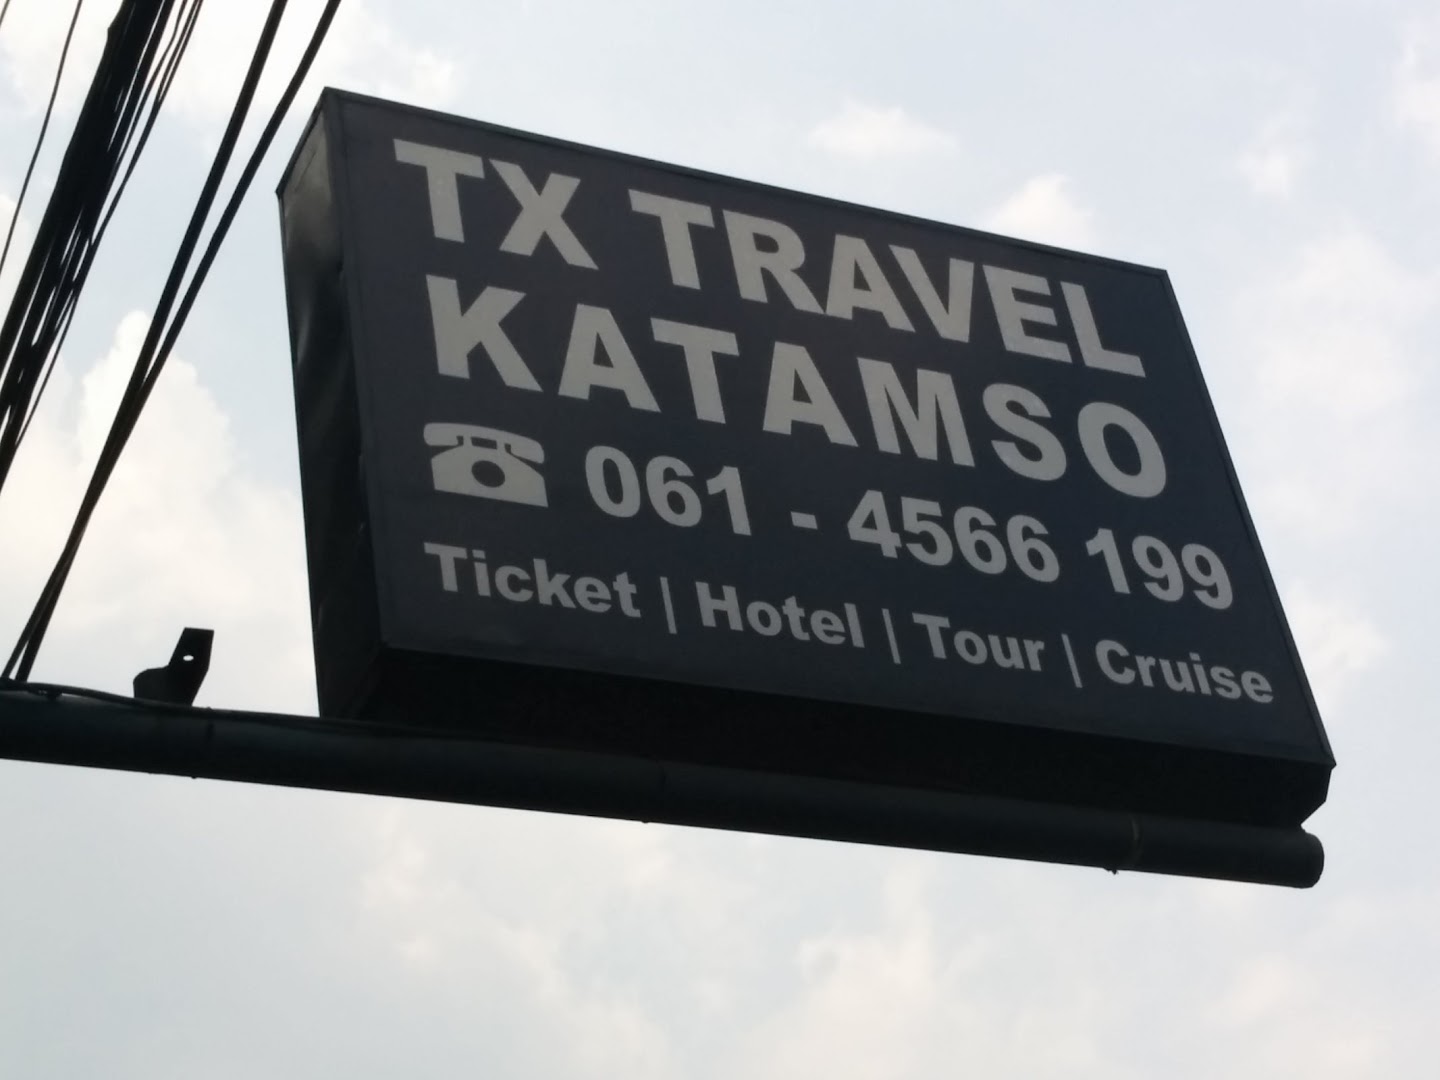 Tx Travel Katamso Photo